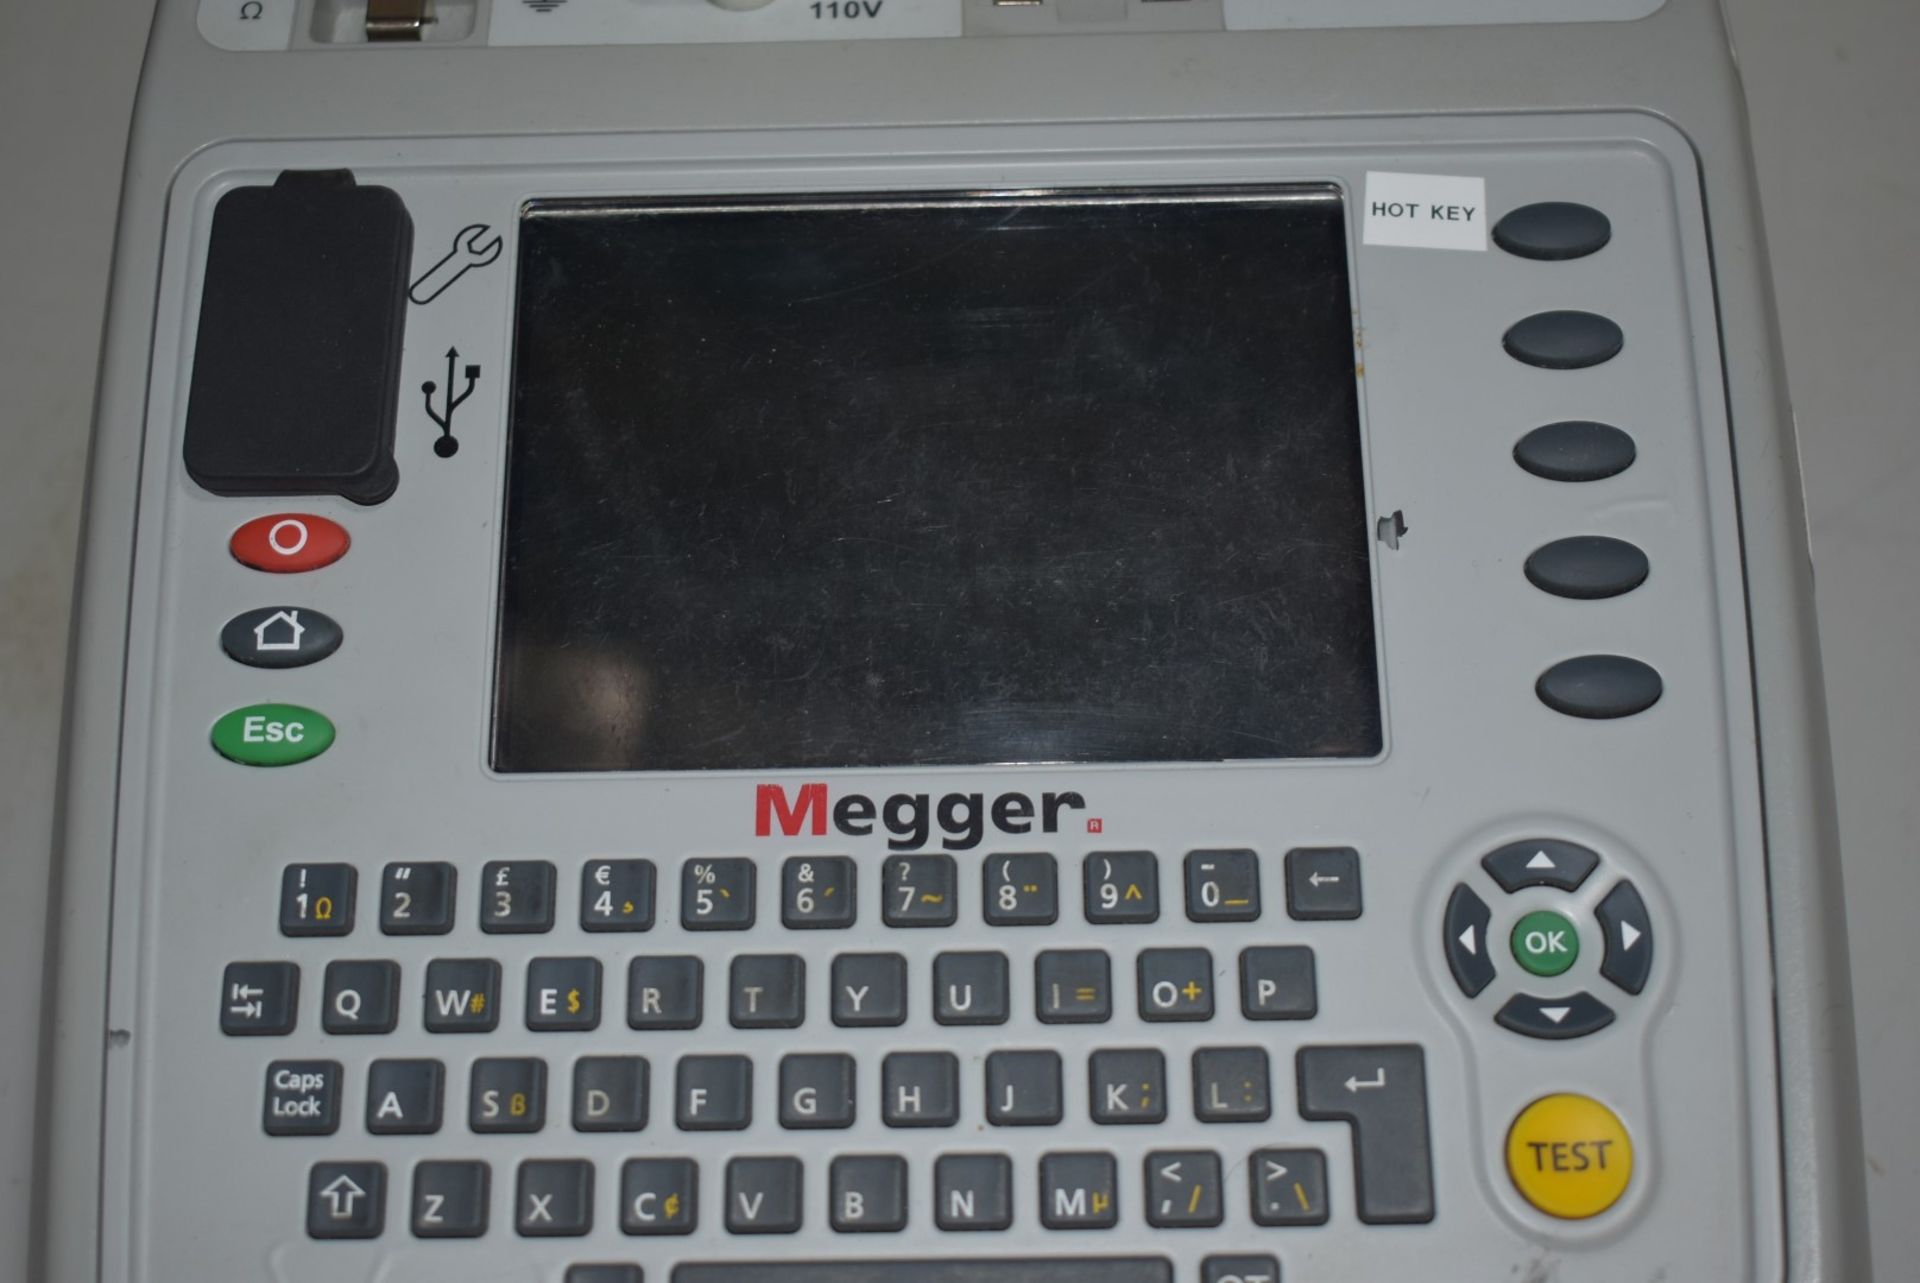 1 x MEGGER PAT420 Portable Appliance Tester- Original RRP £1,620.00 - Includes Power Lead, Pocket - Image 2 of 6